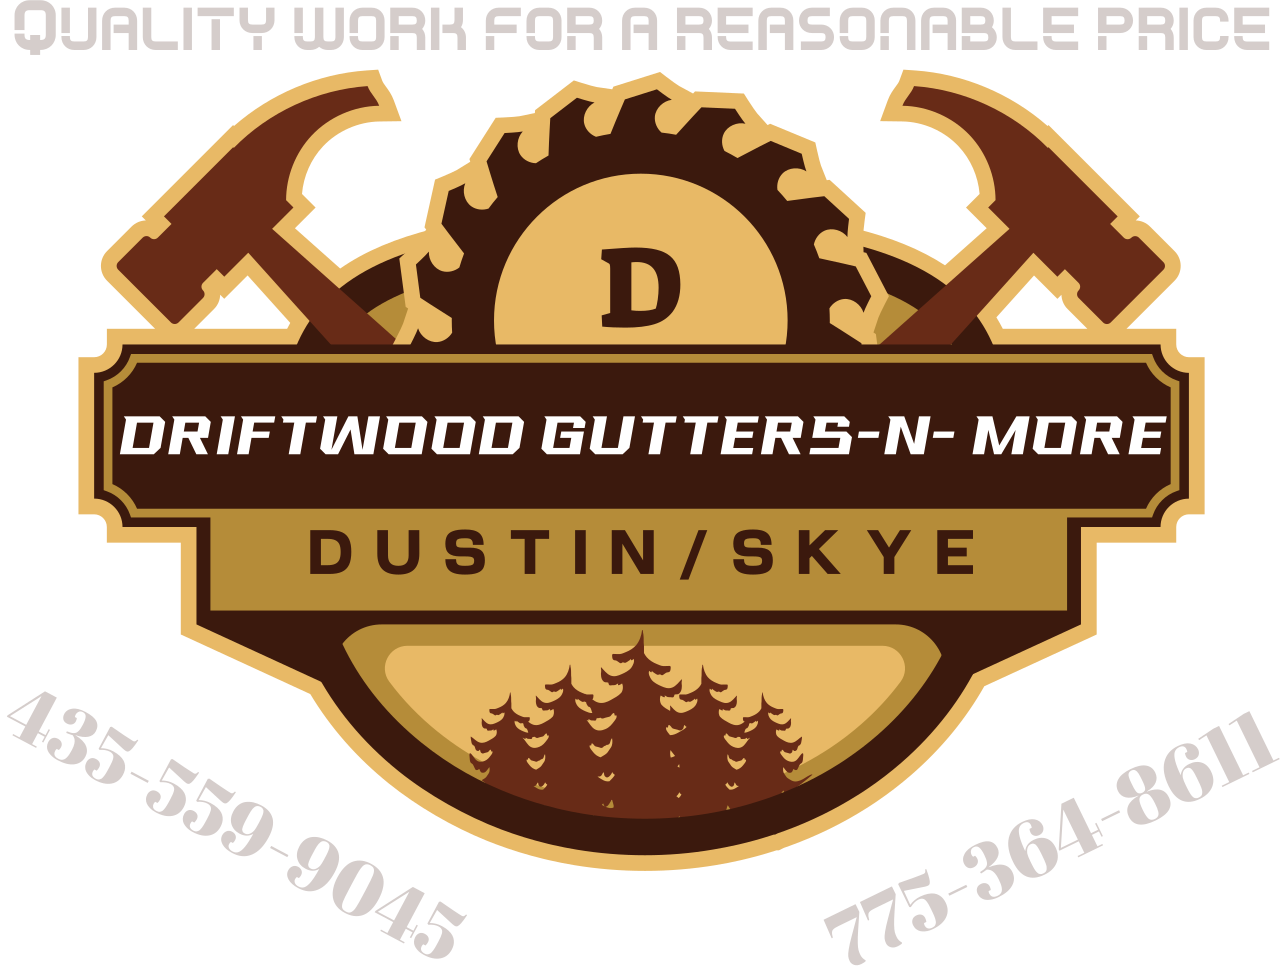 Driftwood Gutters-n- more's logo